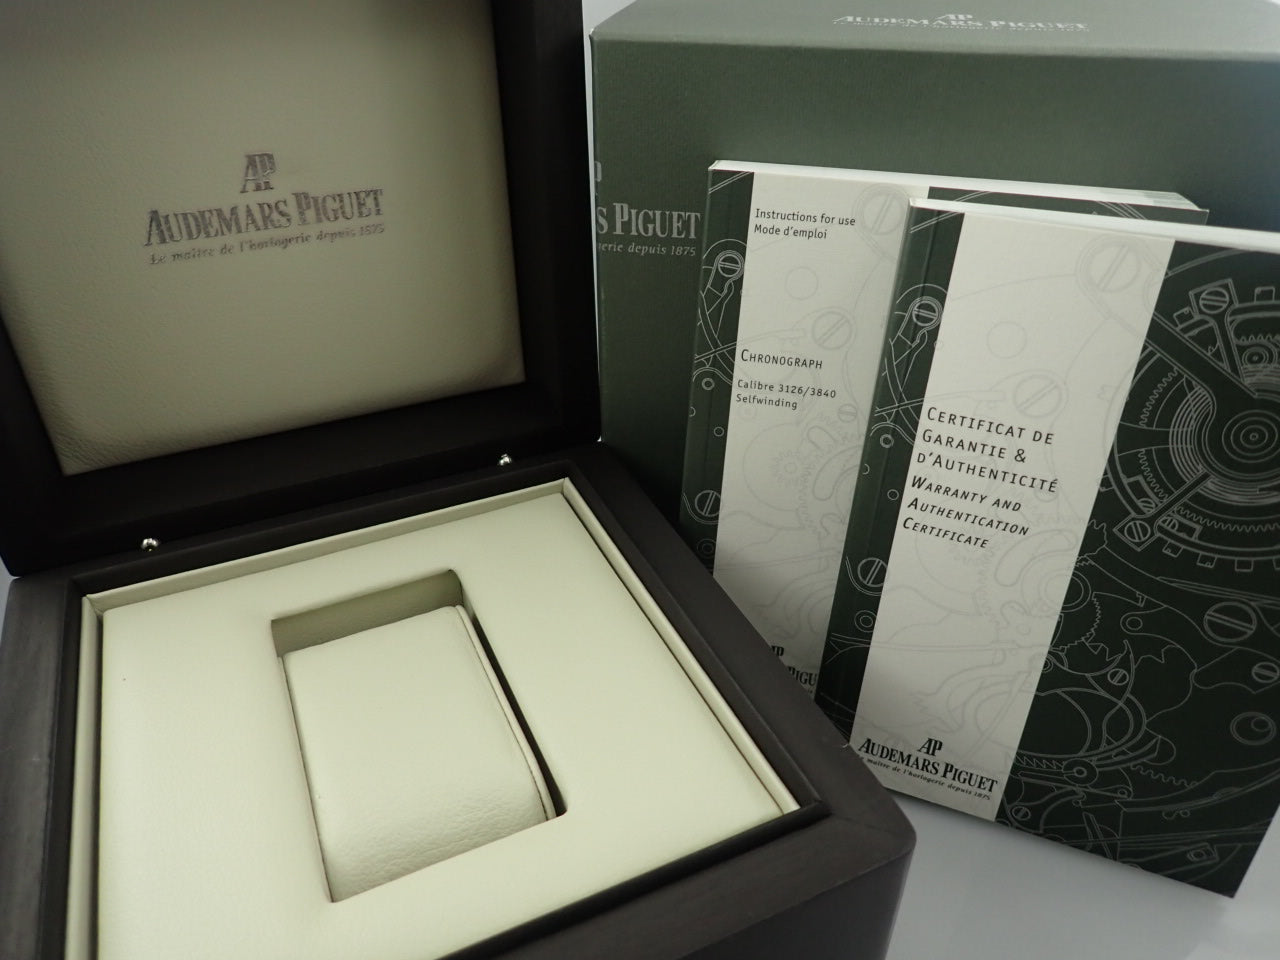 Audemars Piguet Royal Oak Offshore Chronograph &lt;Warranty Box and Others&gt;